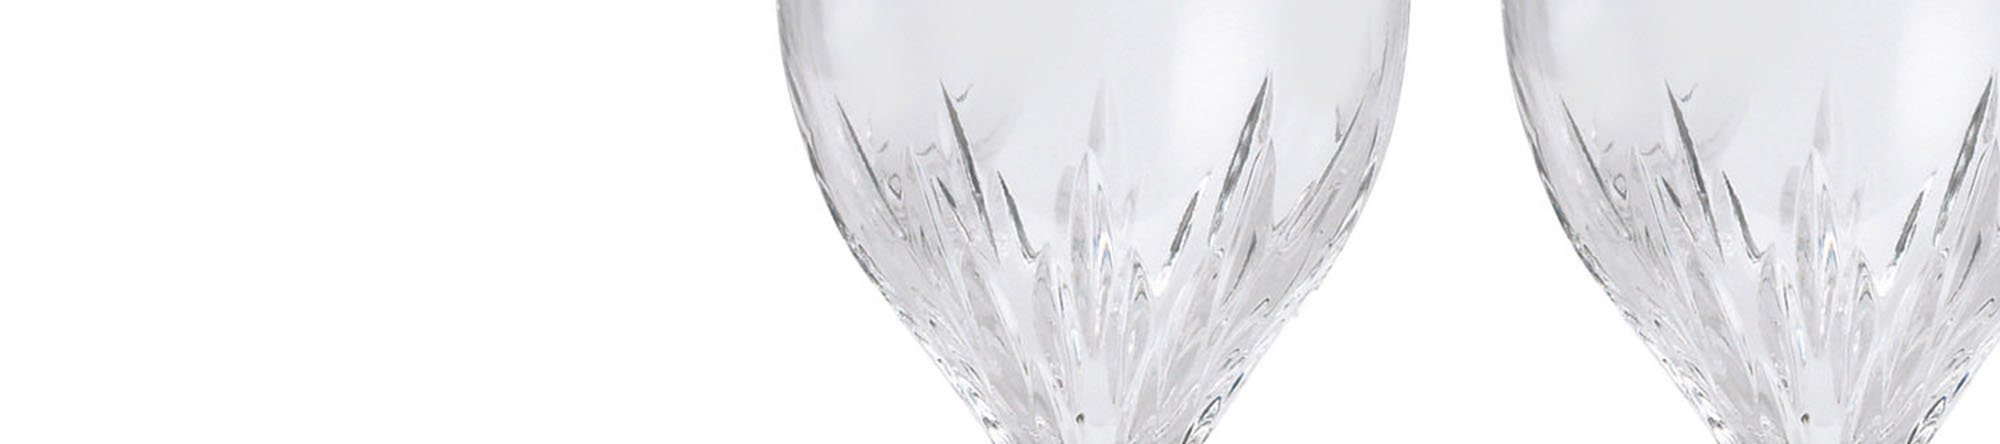 vera wang wedgwood vase of vera wang crystalware vases champagne flutes wine glasses intended for vera wang duchesse